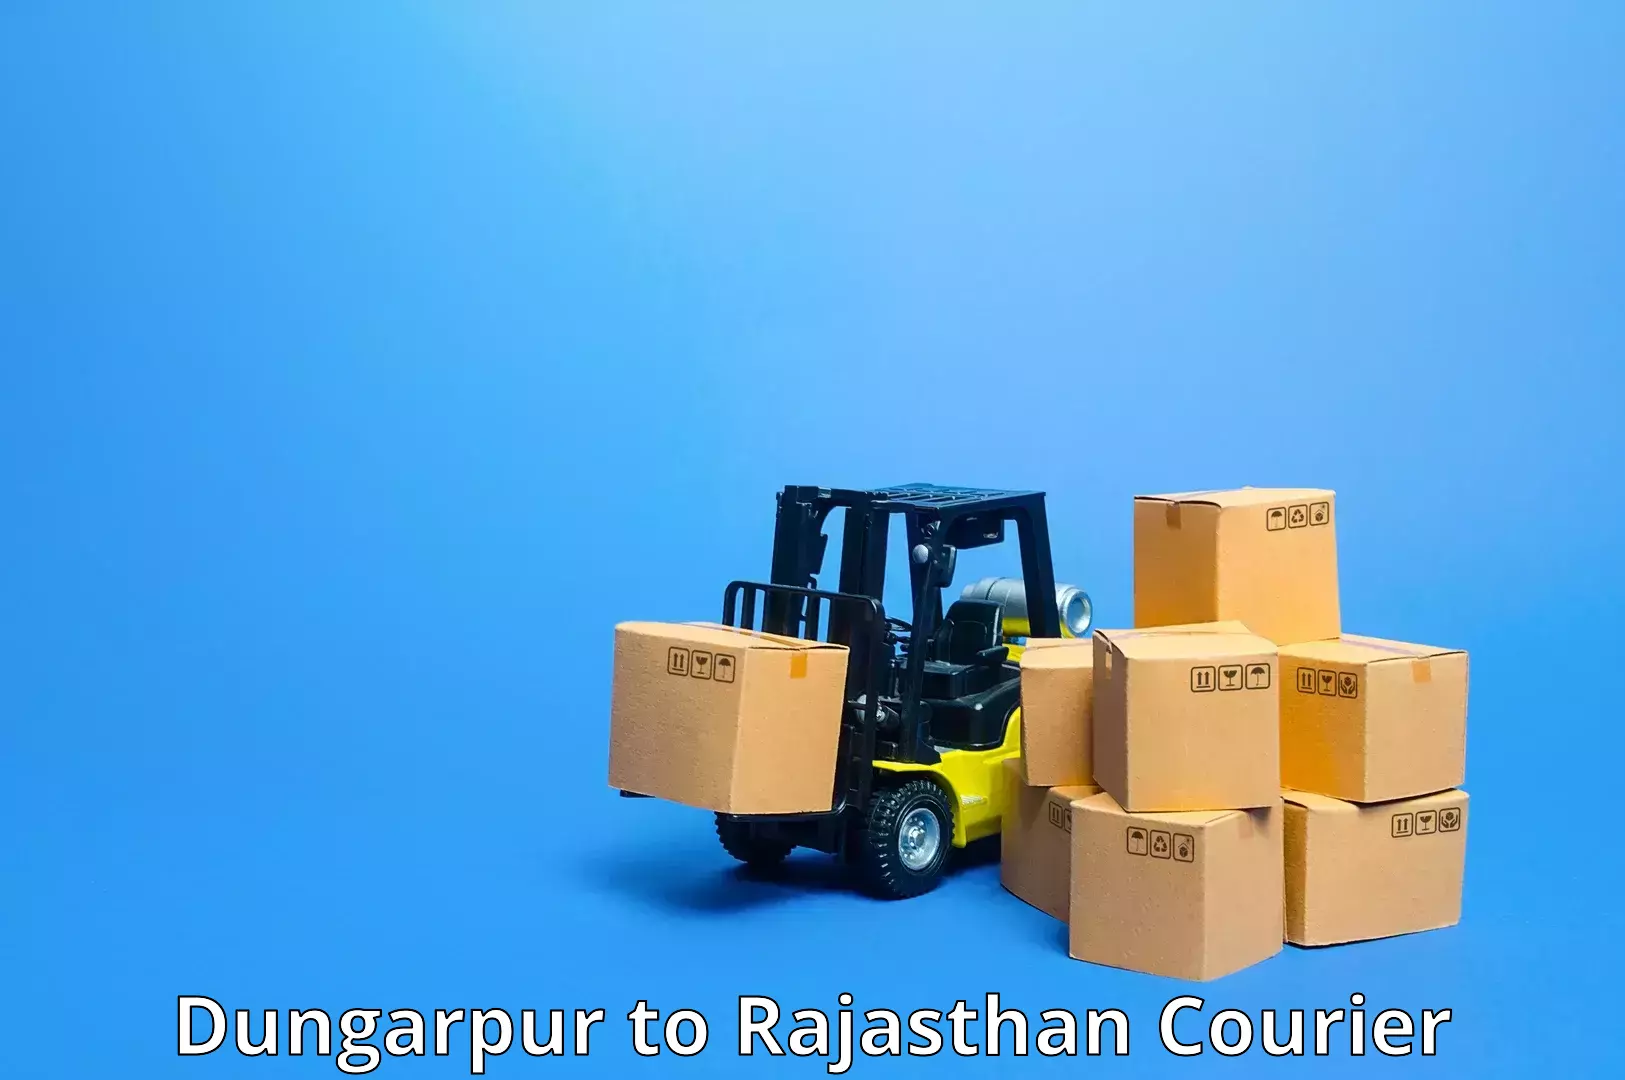 High-speed parcel service Dungarpur to Rajasthan